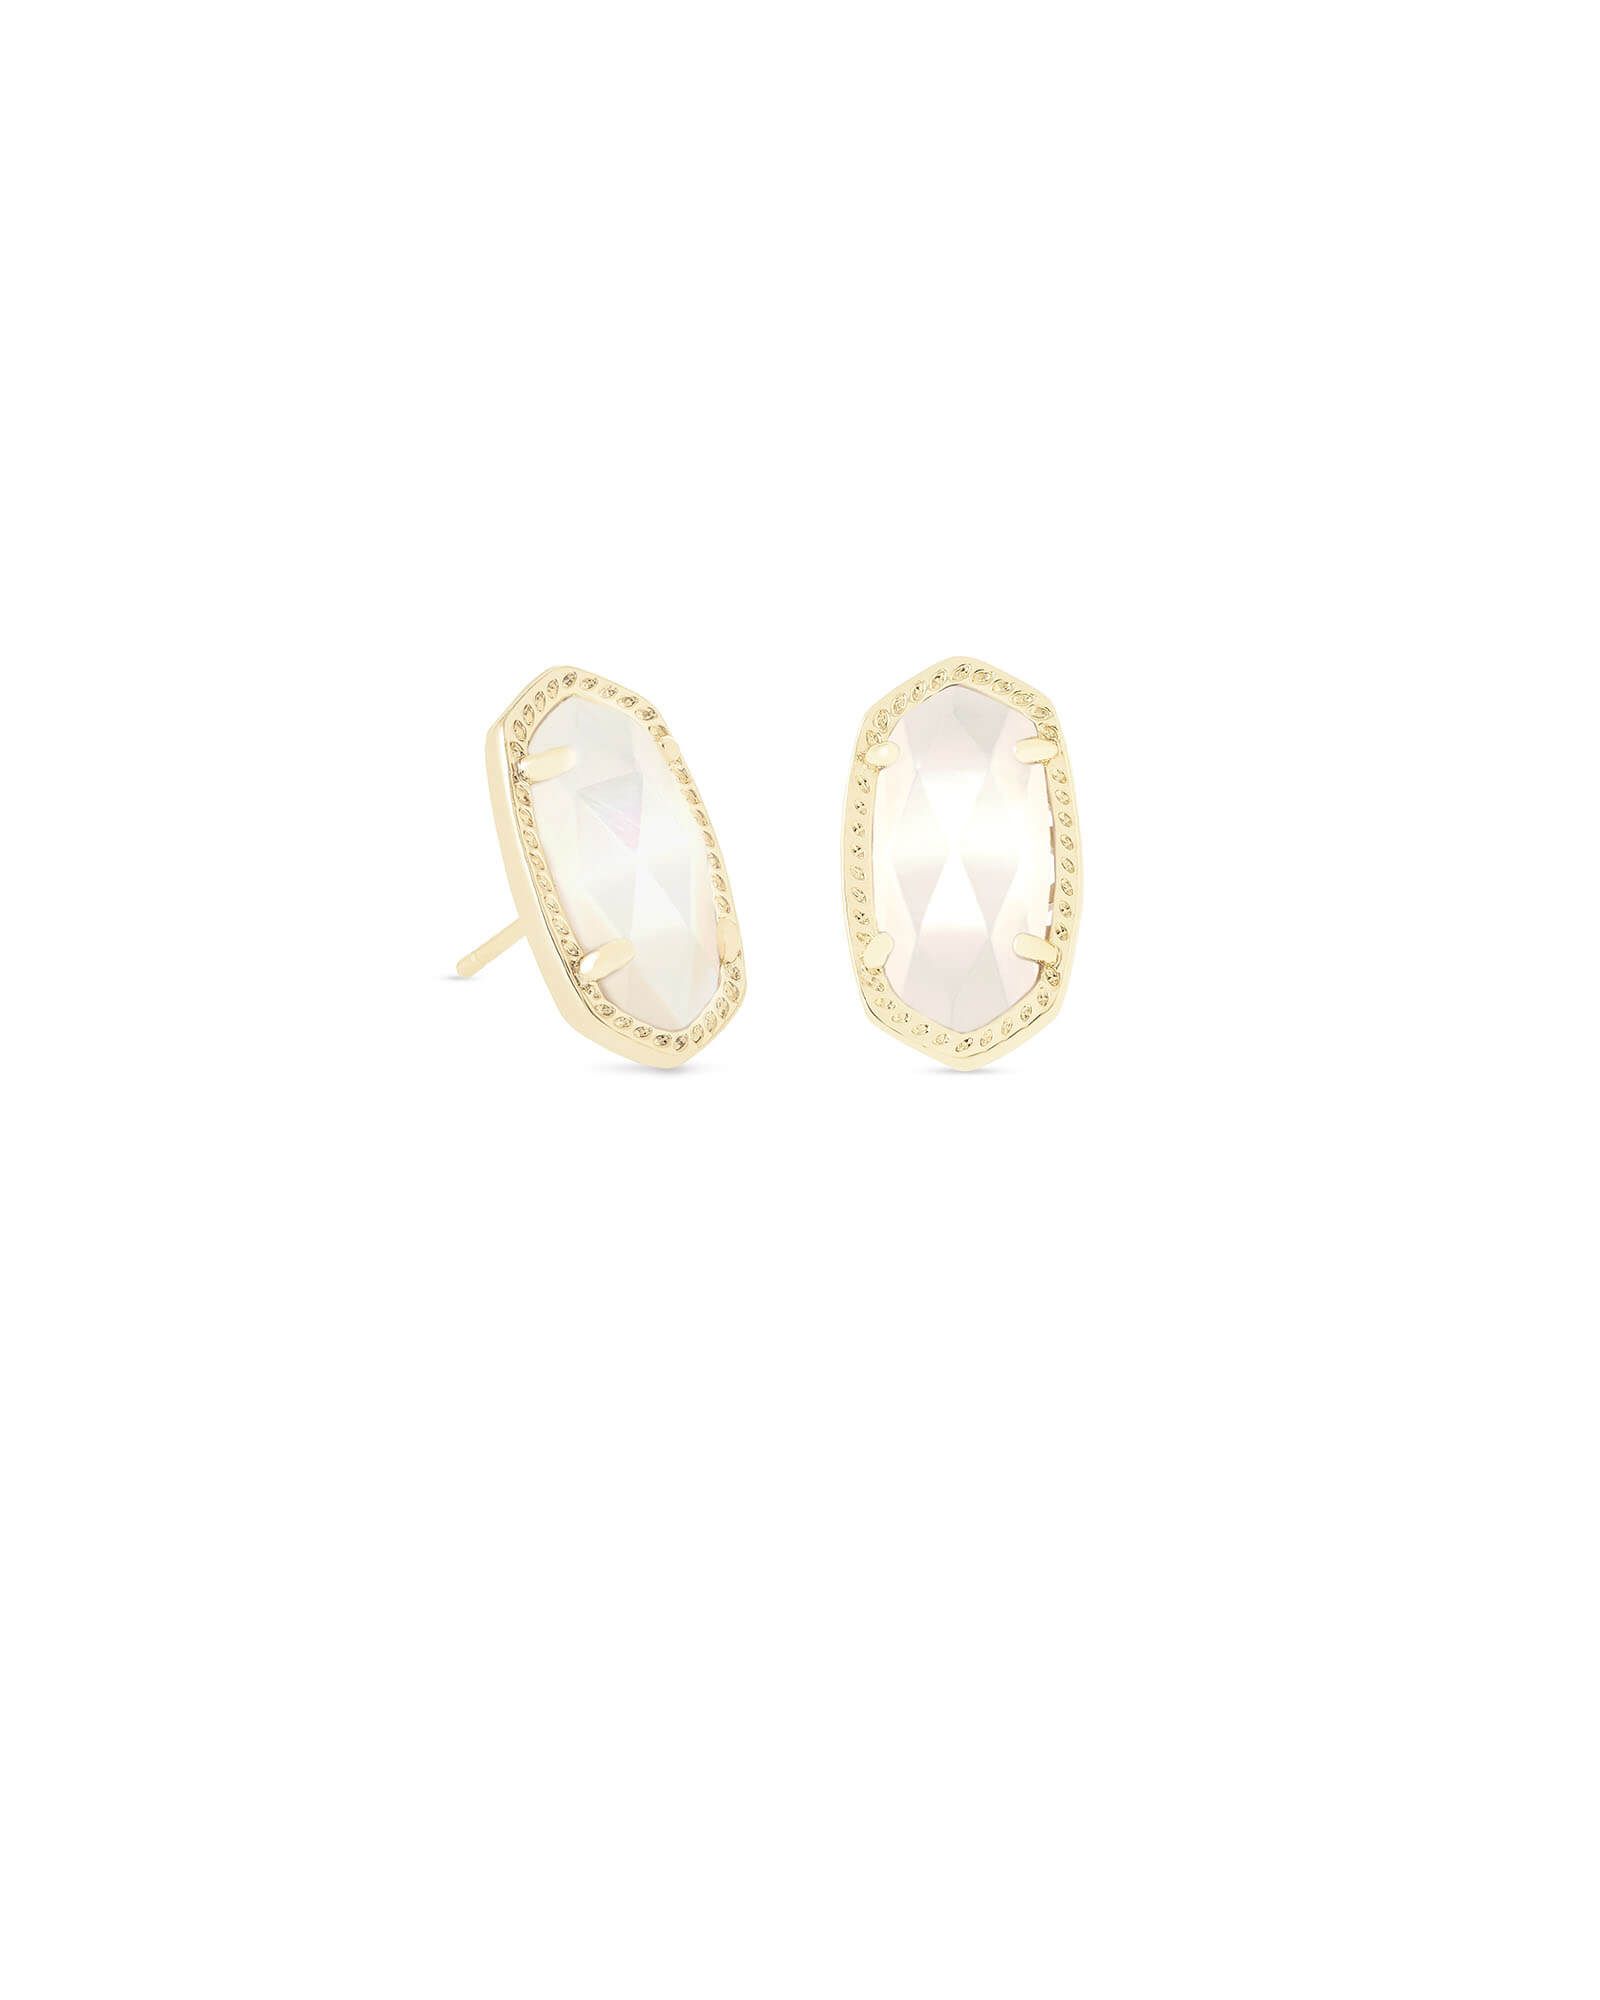 Ellie Gold Stud Earrings in Ivory Pearl | Kendra Scott